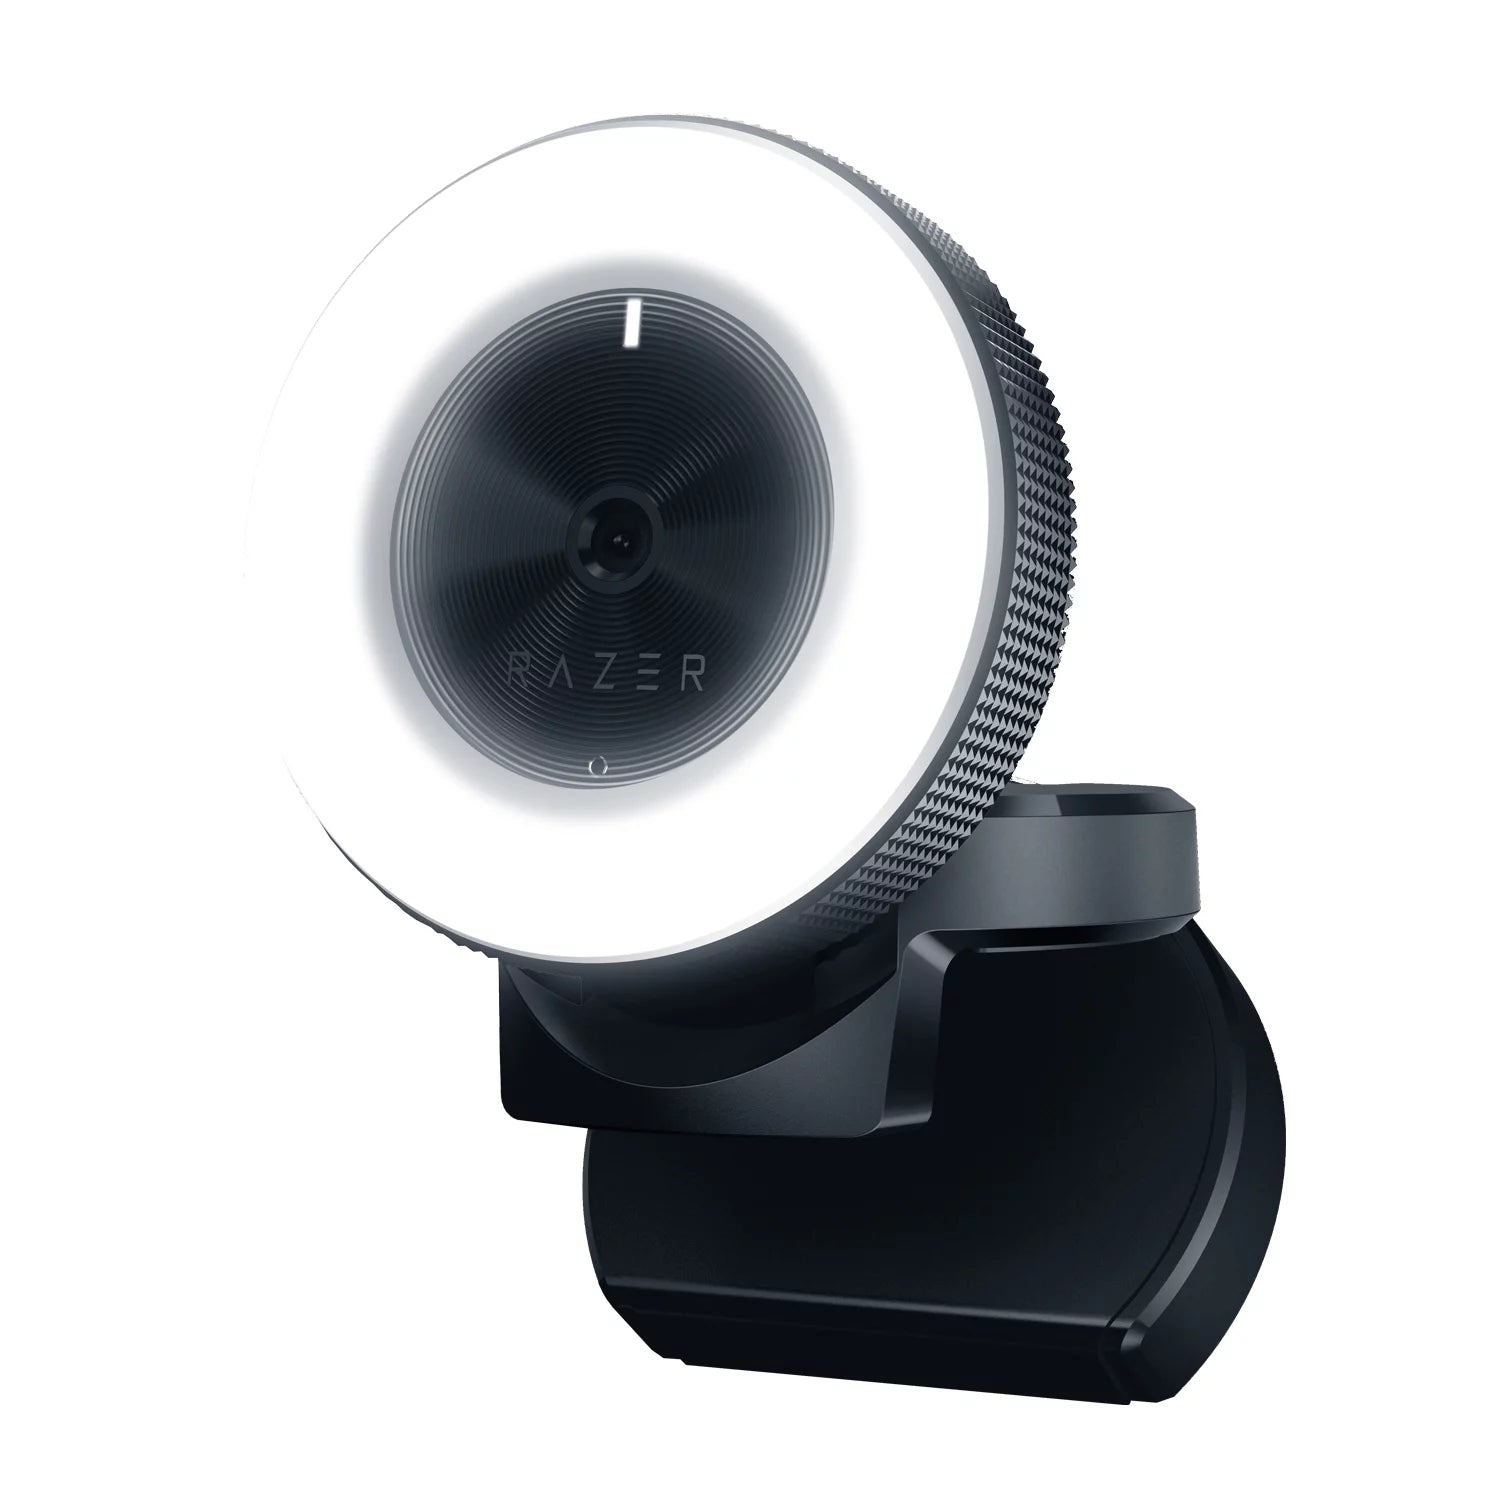 Kiyo Streaming Webcam, Full HD, Auto Focus, Ring Light with Adjustable Brightness, Black